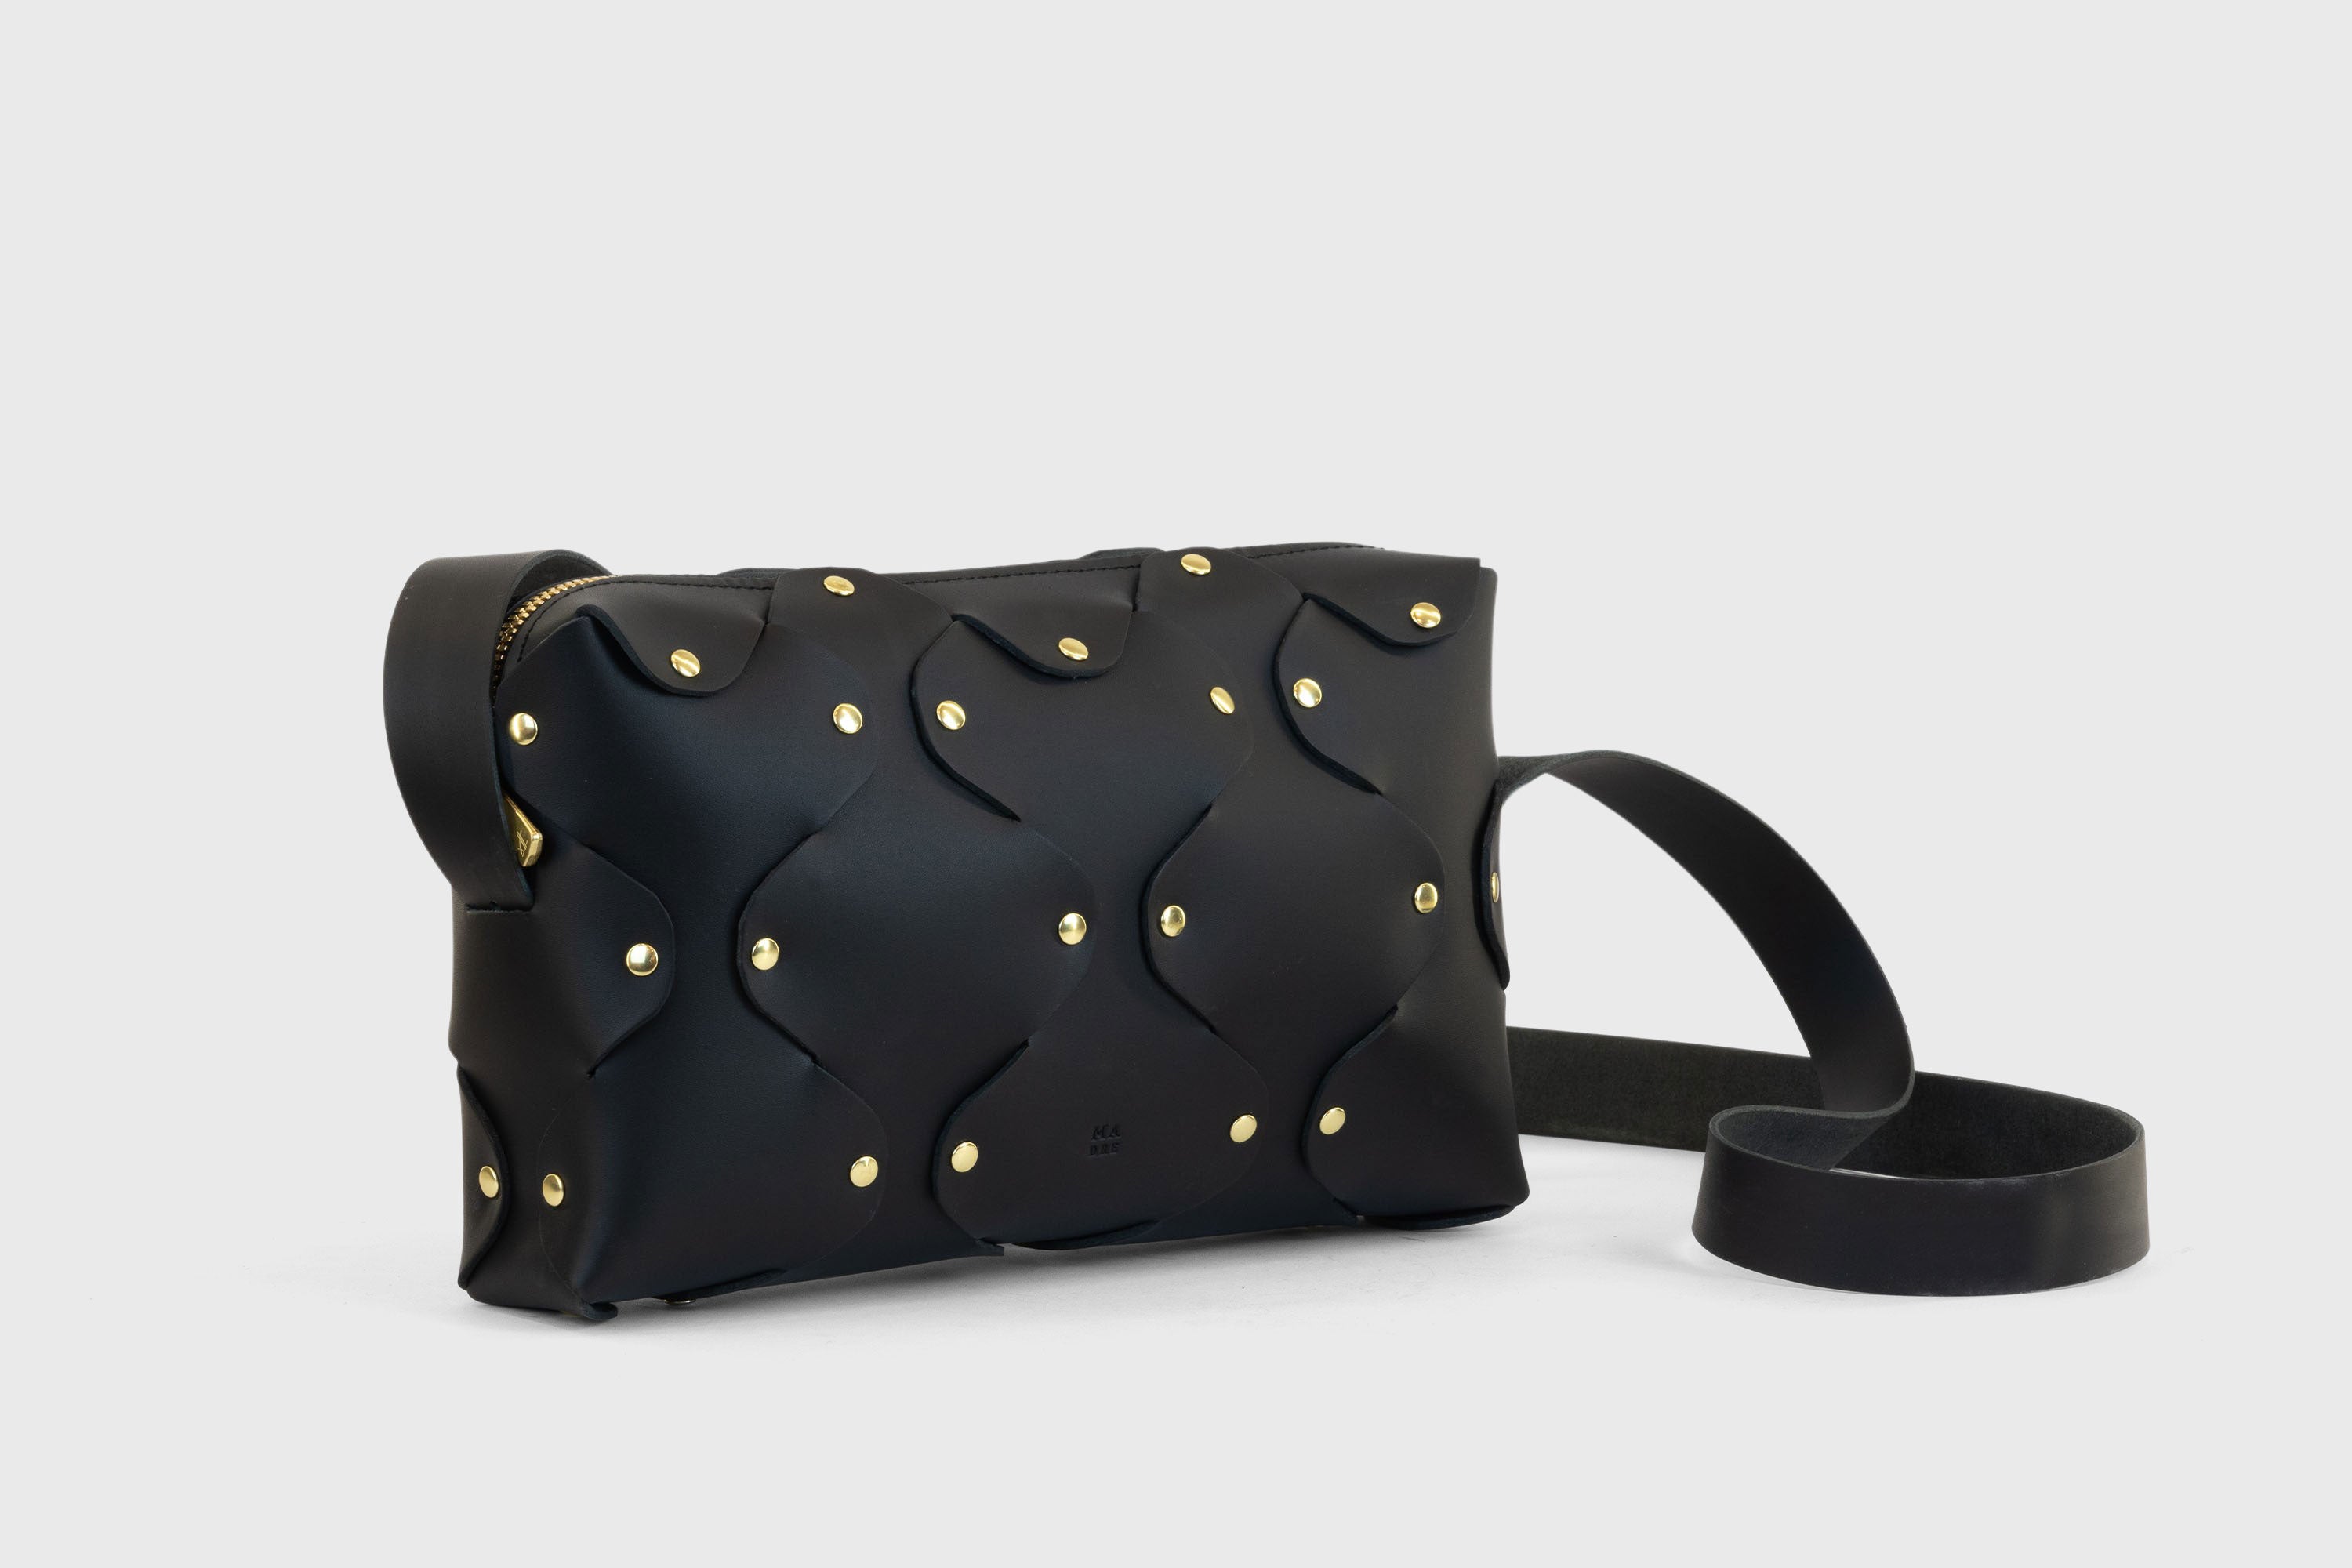 Marlin Leather Bag Black Quality Brass Rivet Designer Minimal Square Zipper Pouch Crossbody Handbag Clutch Shoulder Atelier Madre Manuel Dreesmann Barcelona